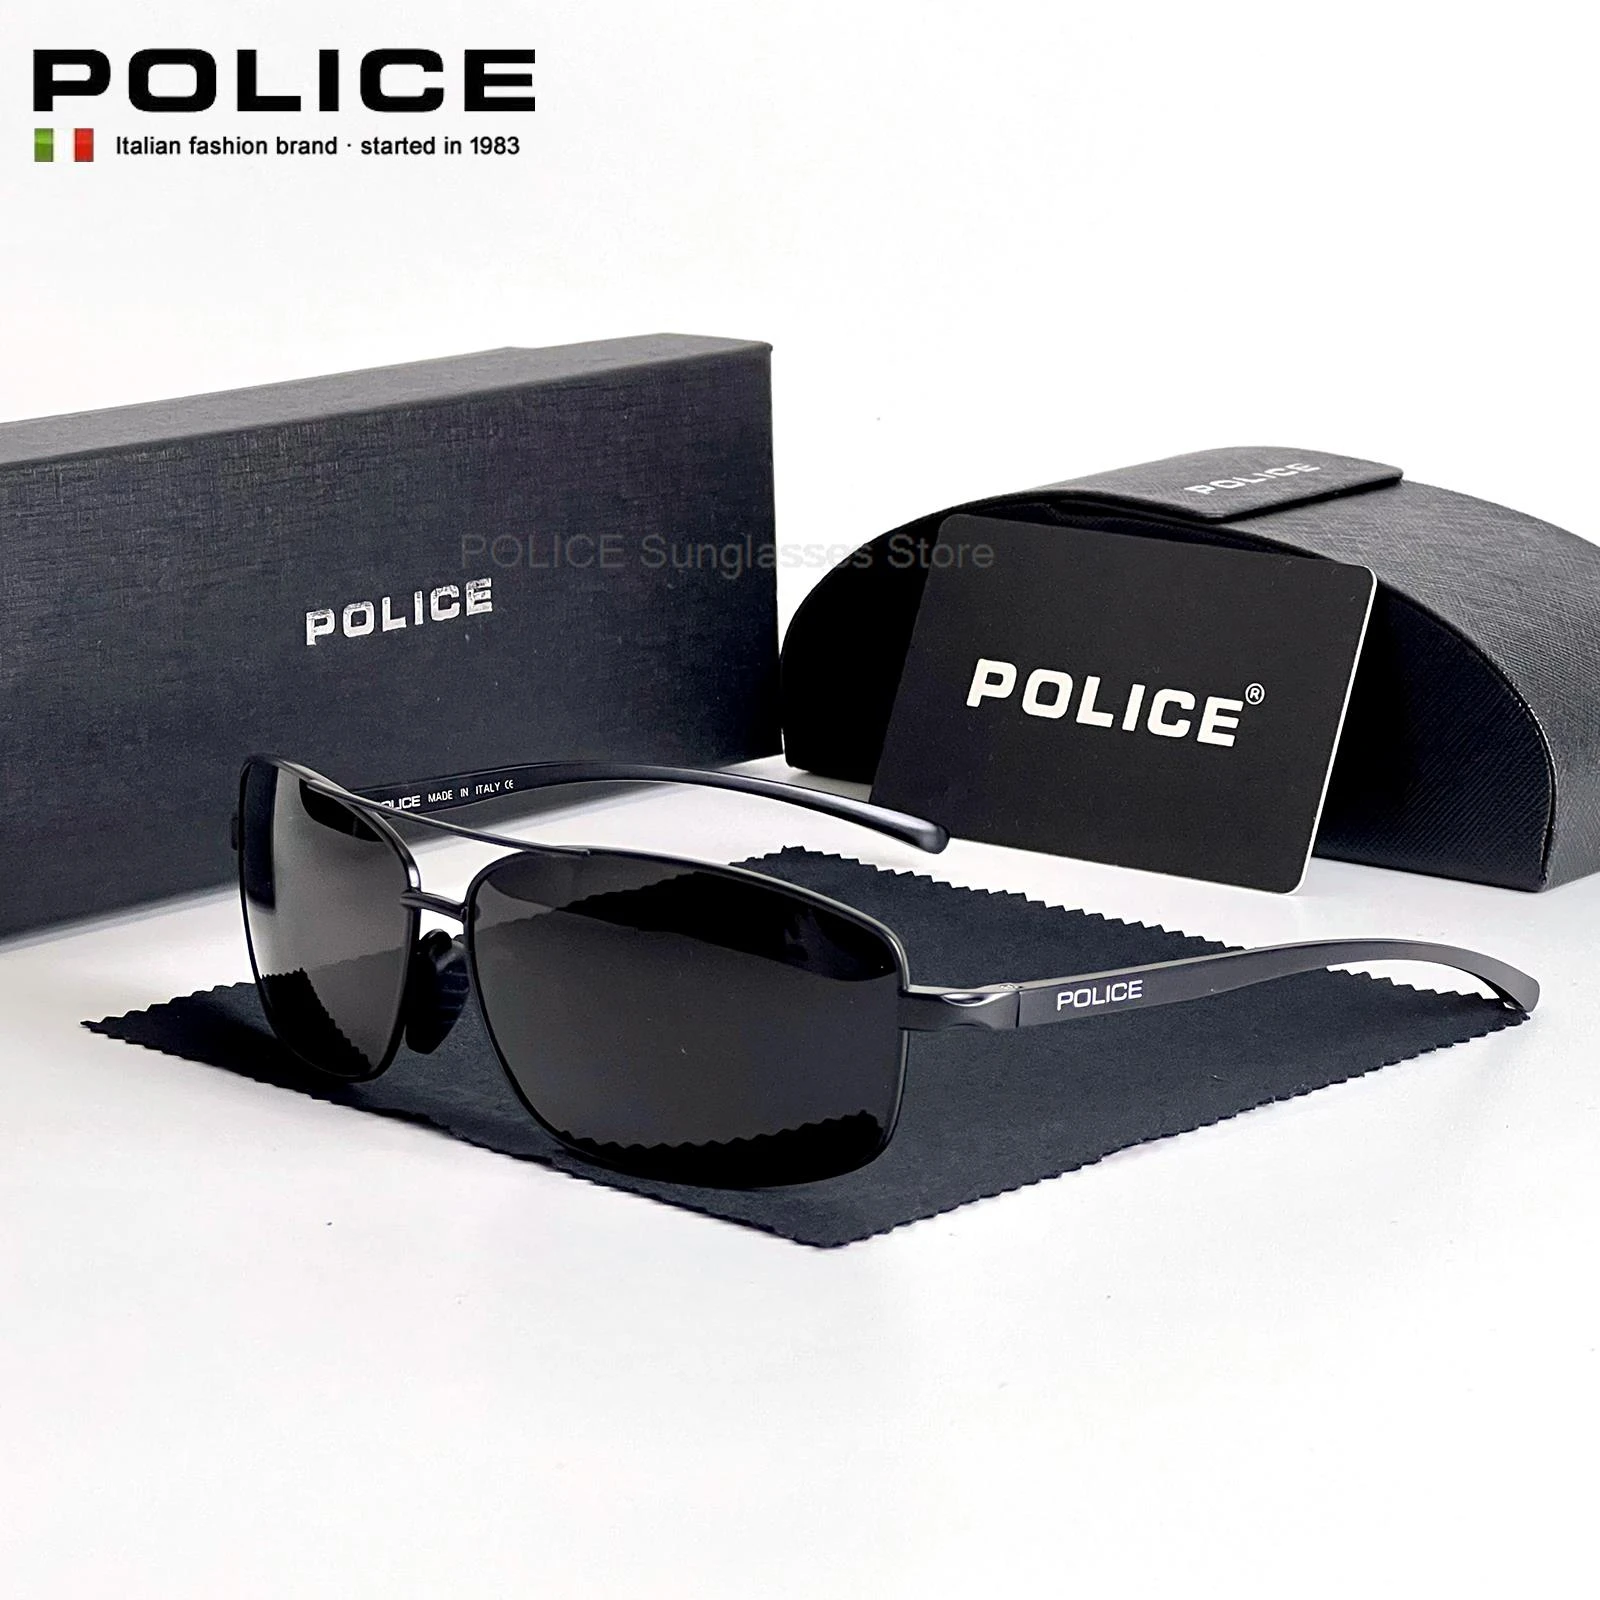 Gafas de sol de policía para hombre, lentes de sol polarizadas de marca de lujo con protección UV400, antideslumbrantes para conducir| AliExpress